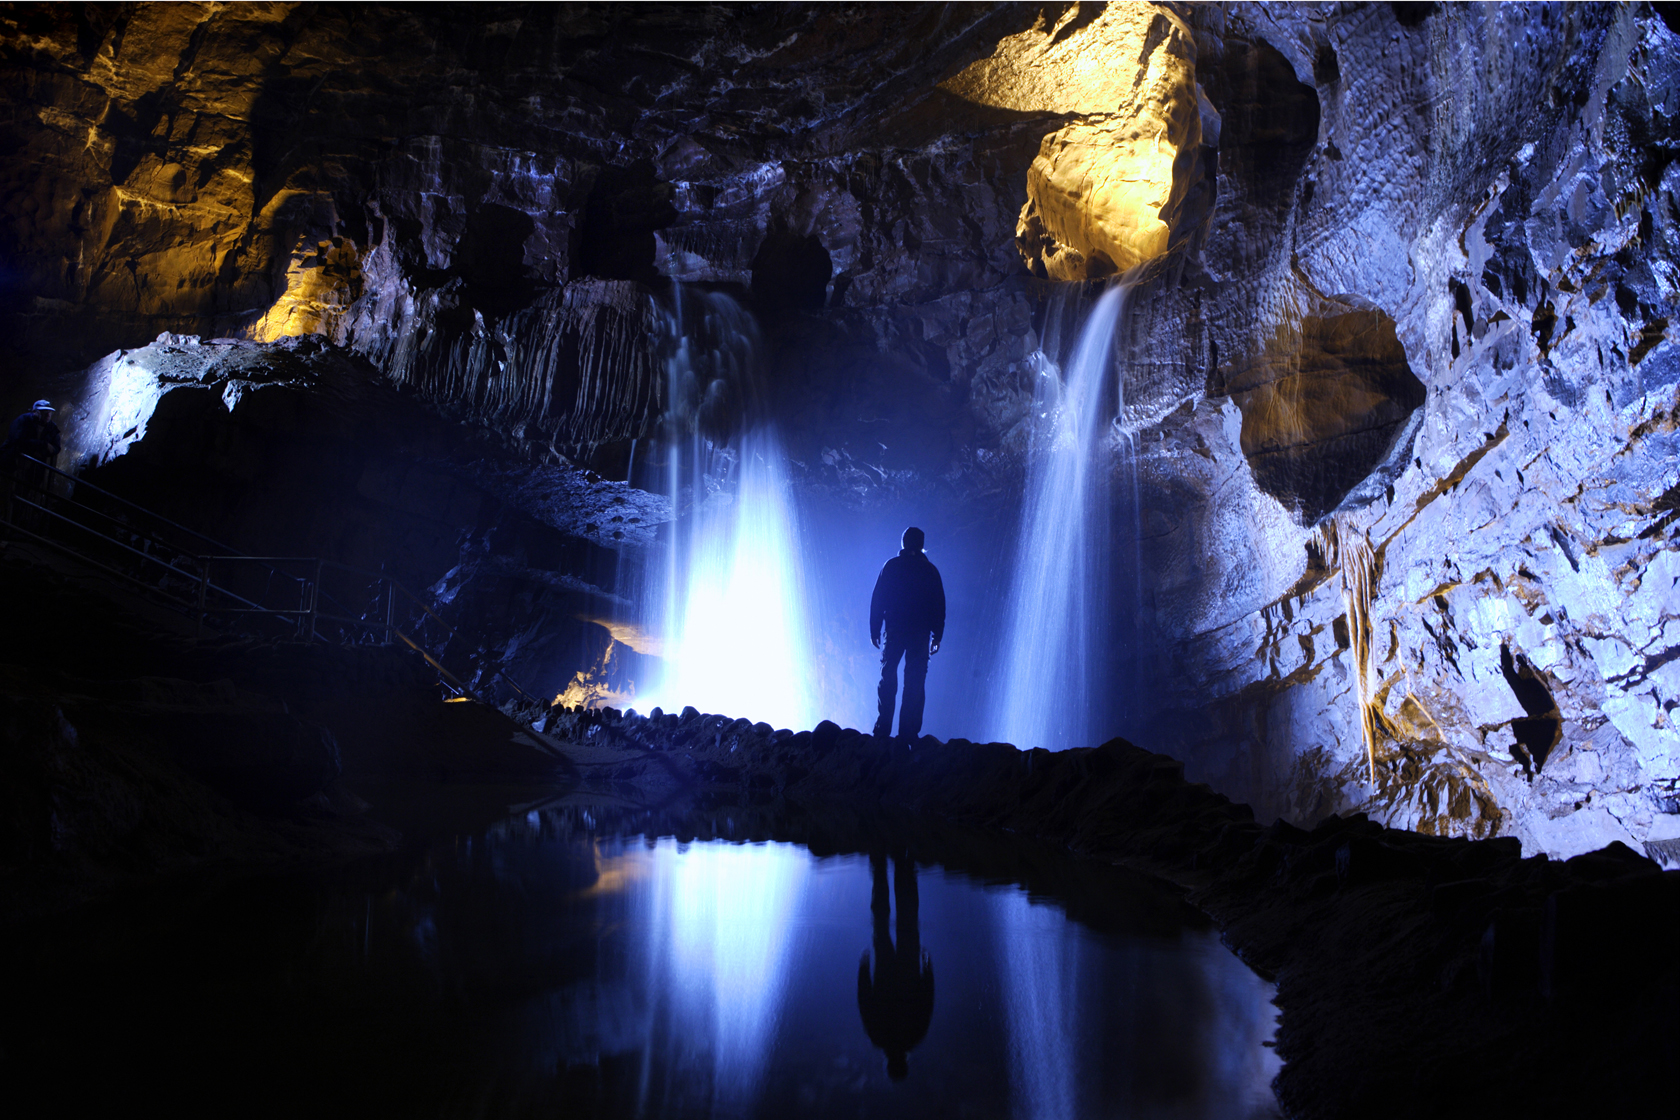 Man and lights in Dan Yr Ogof caves